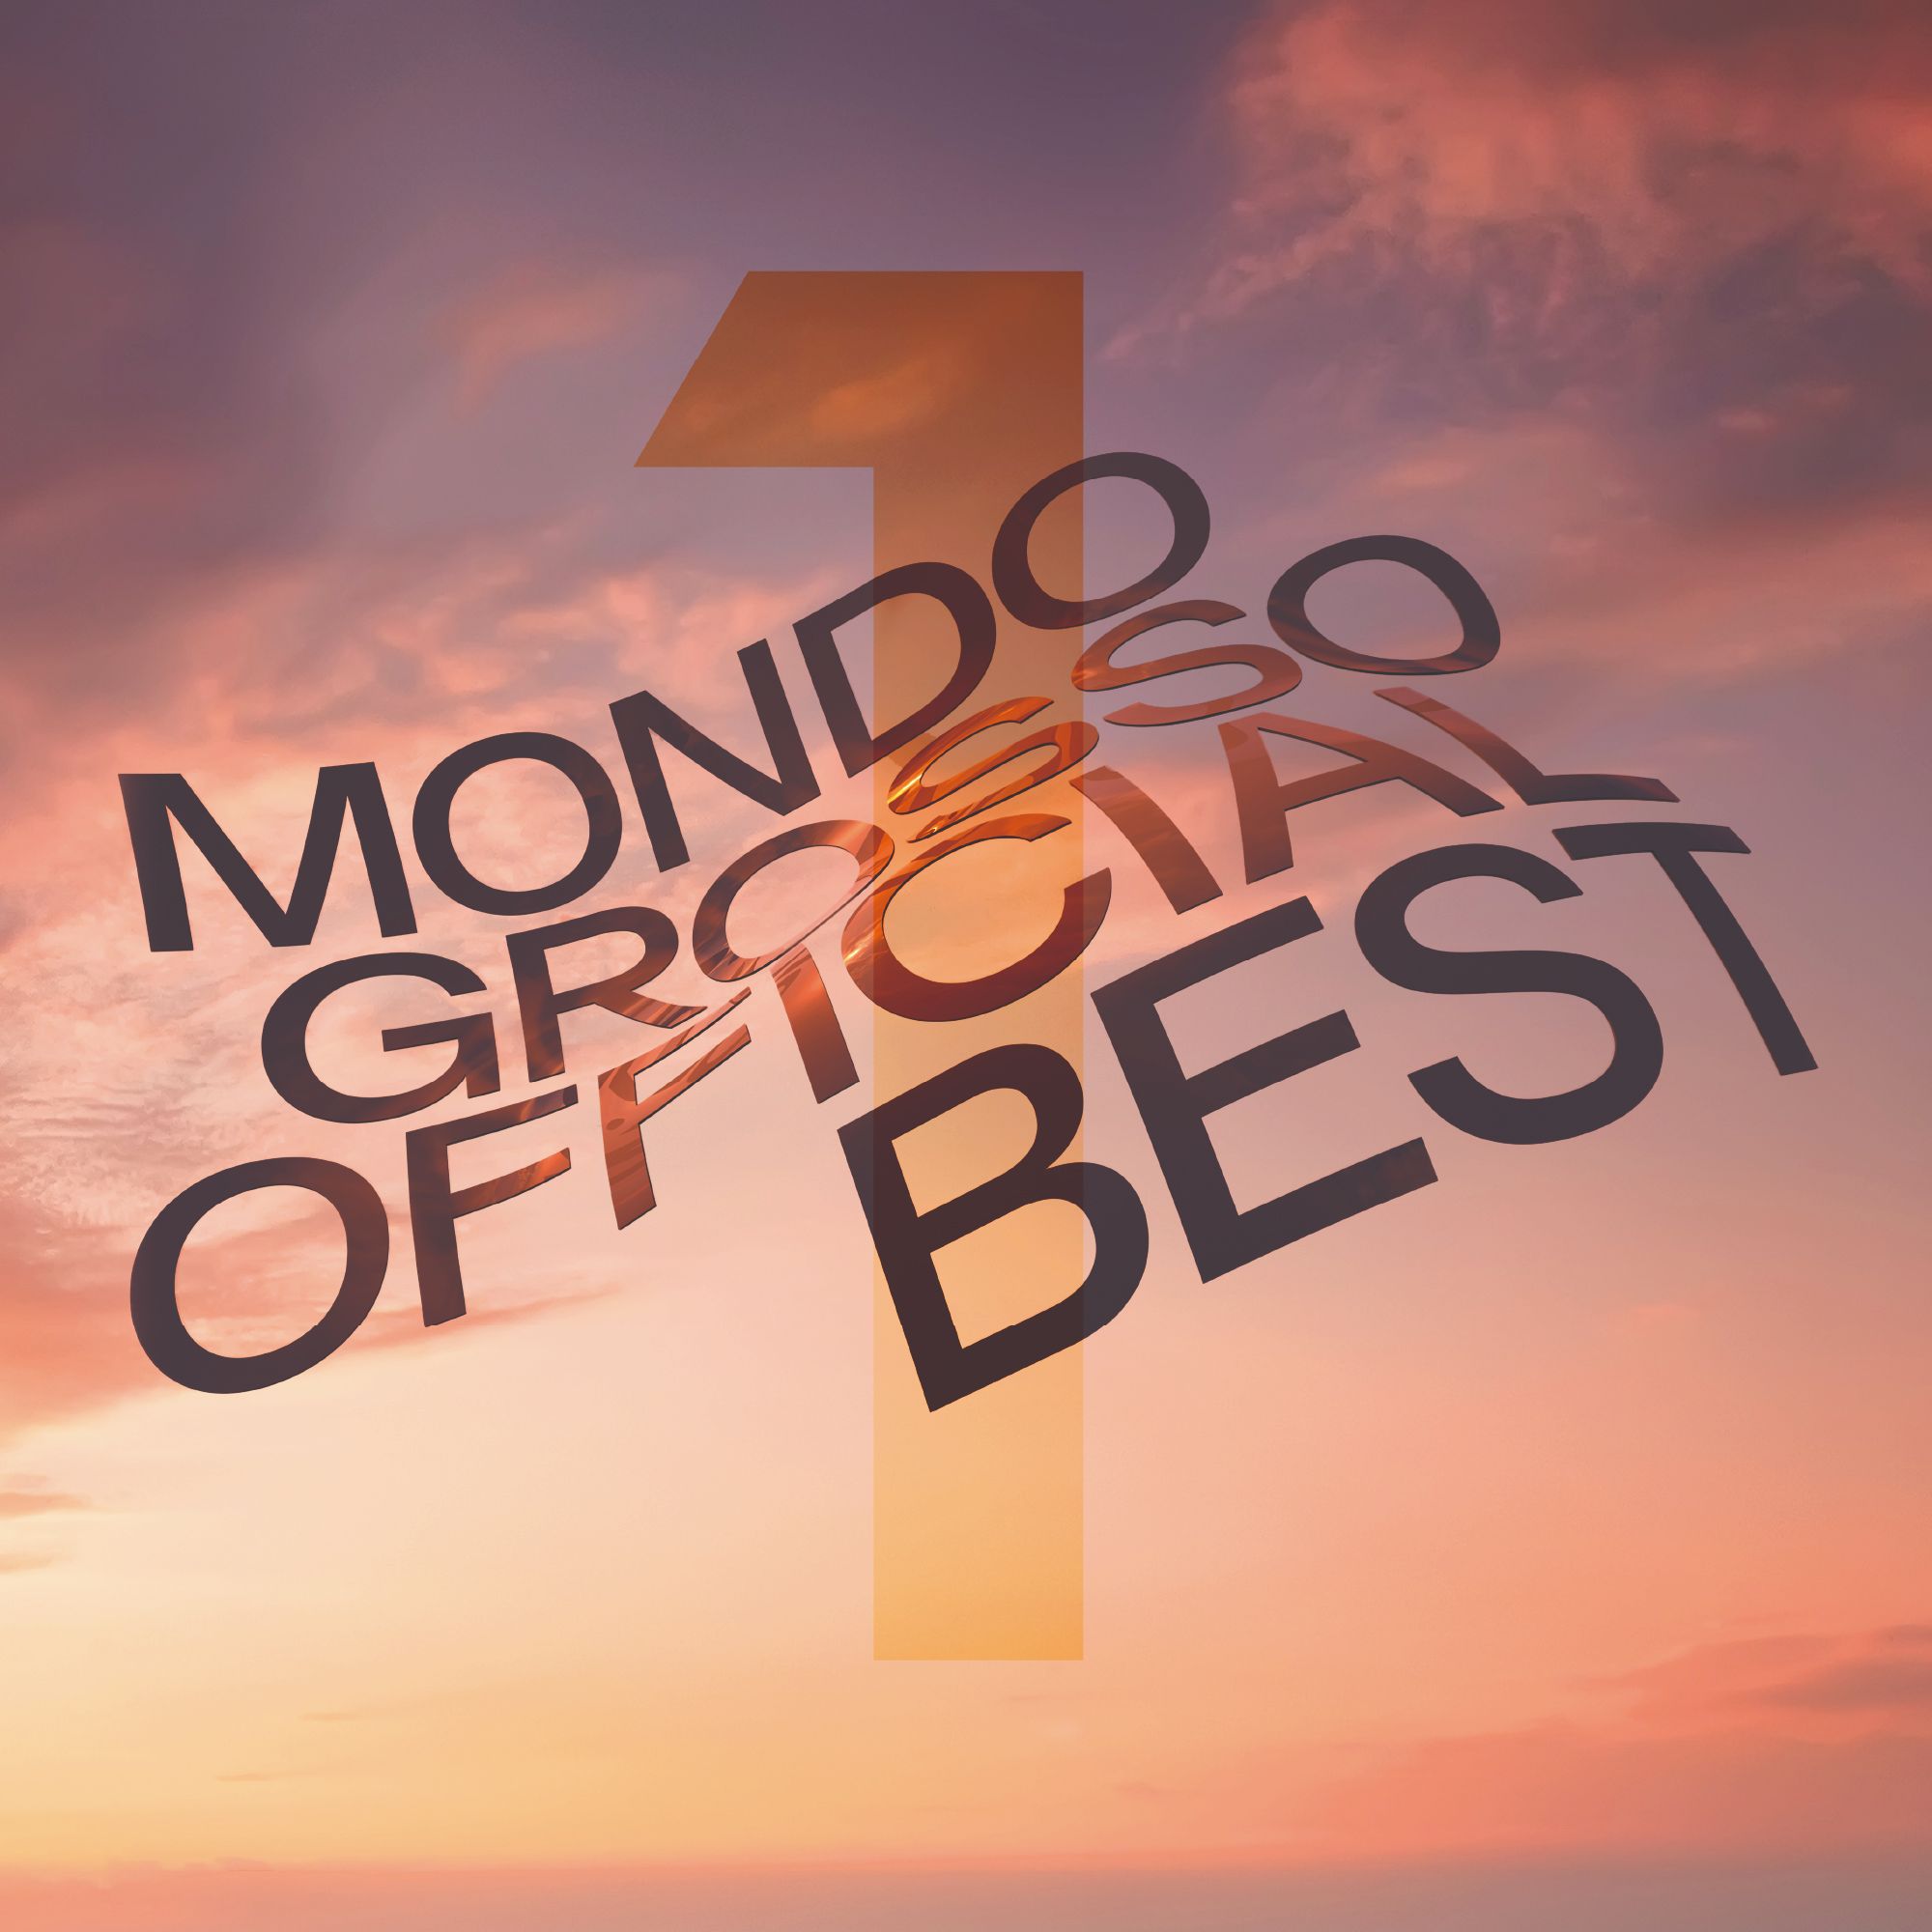 「MONDO GROOSO OFFICAL BEST 」アナログ盤 2022年4月20日 